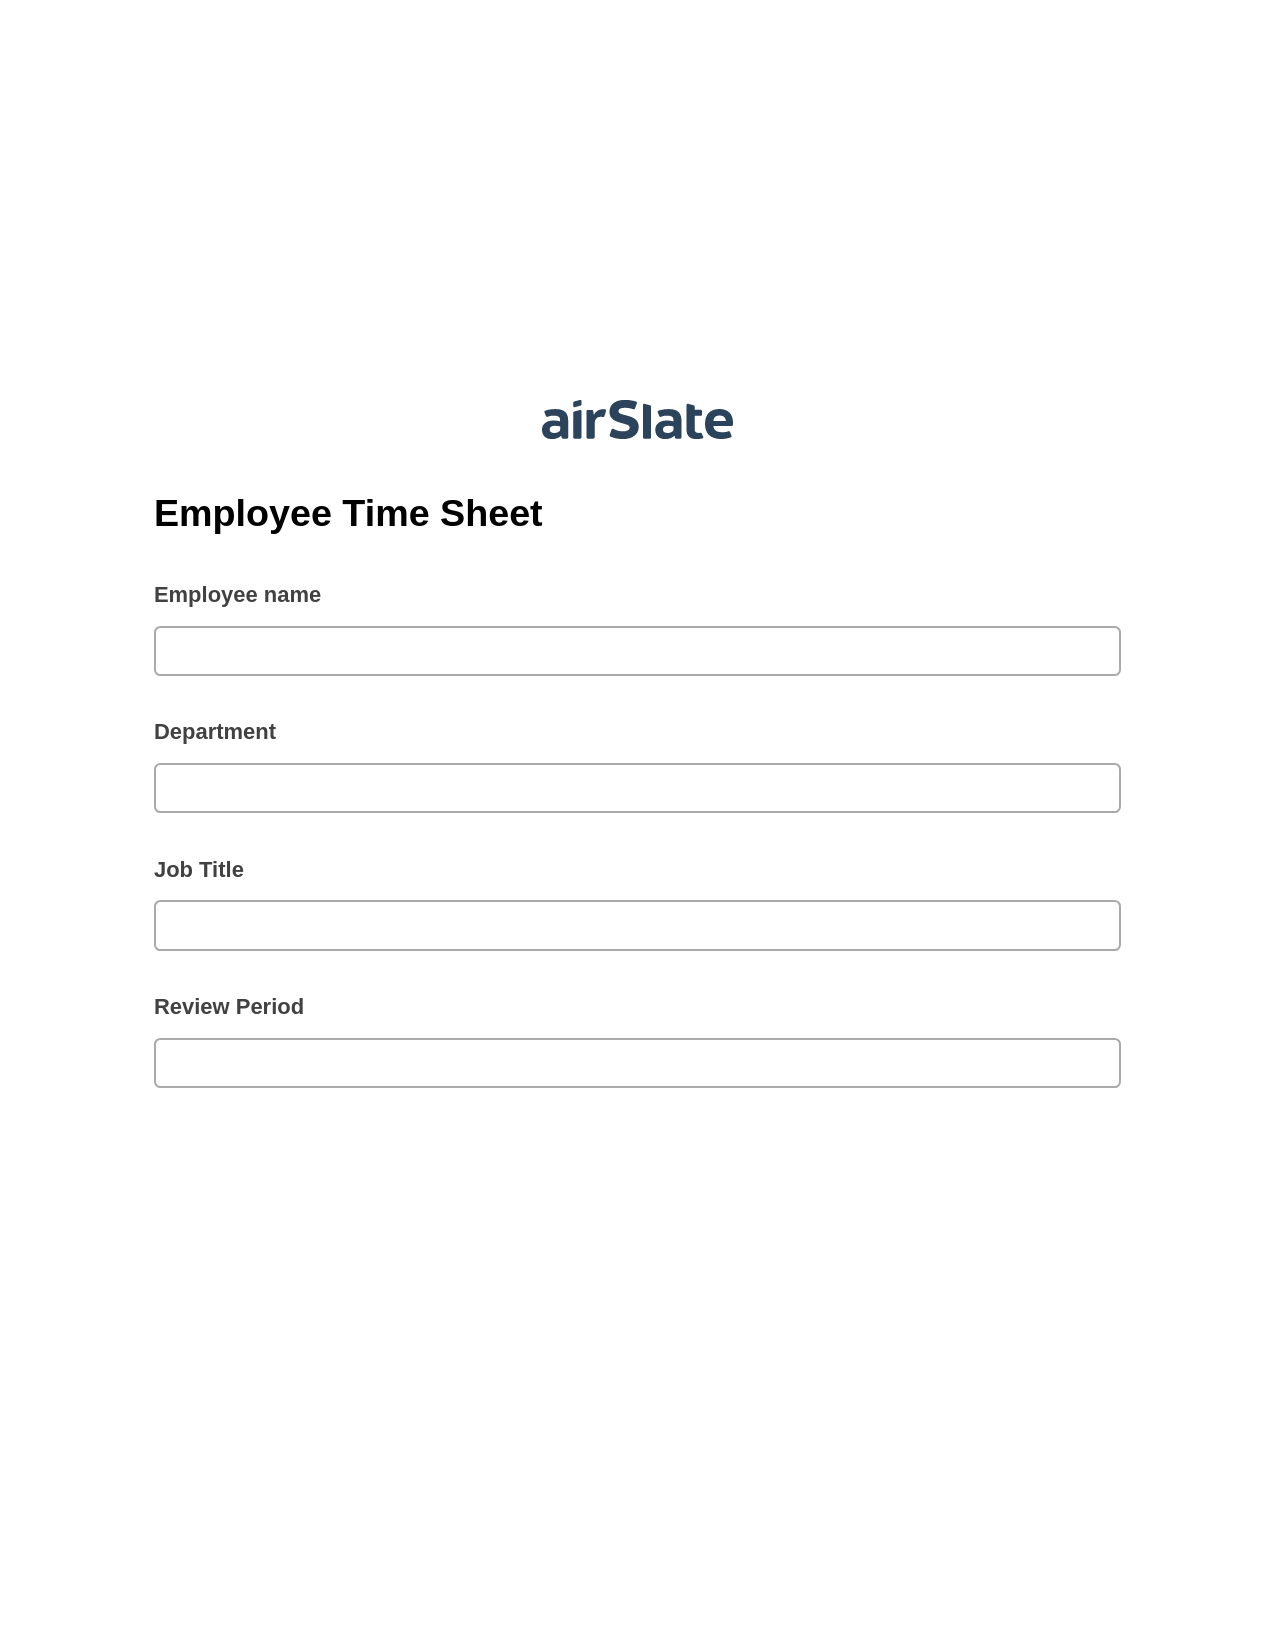 Multirole Employee Time Sheet Pre-fill from MySQL Bot, Create slate addon, Archive to Box Bot